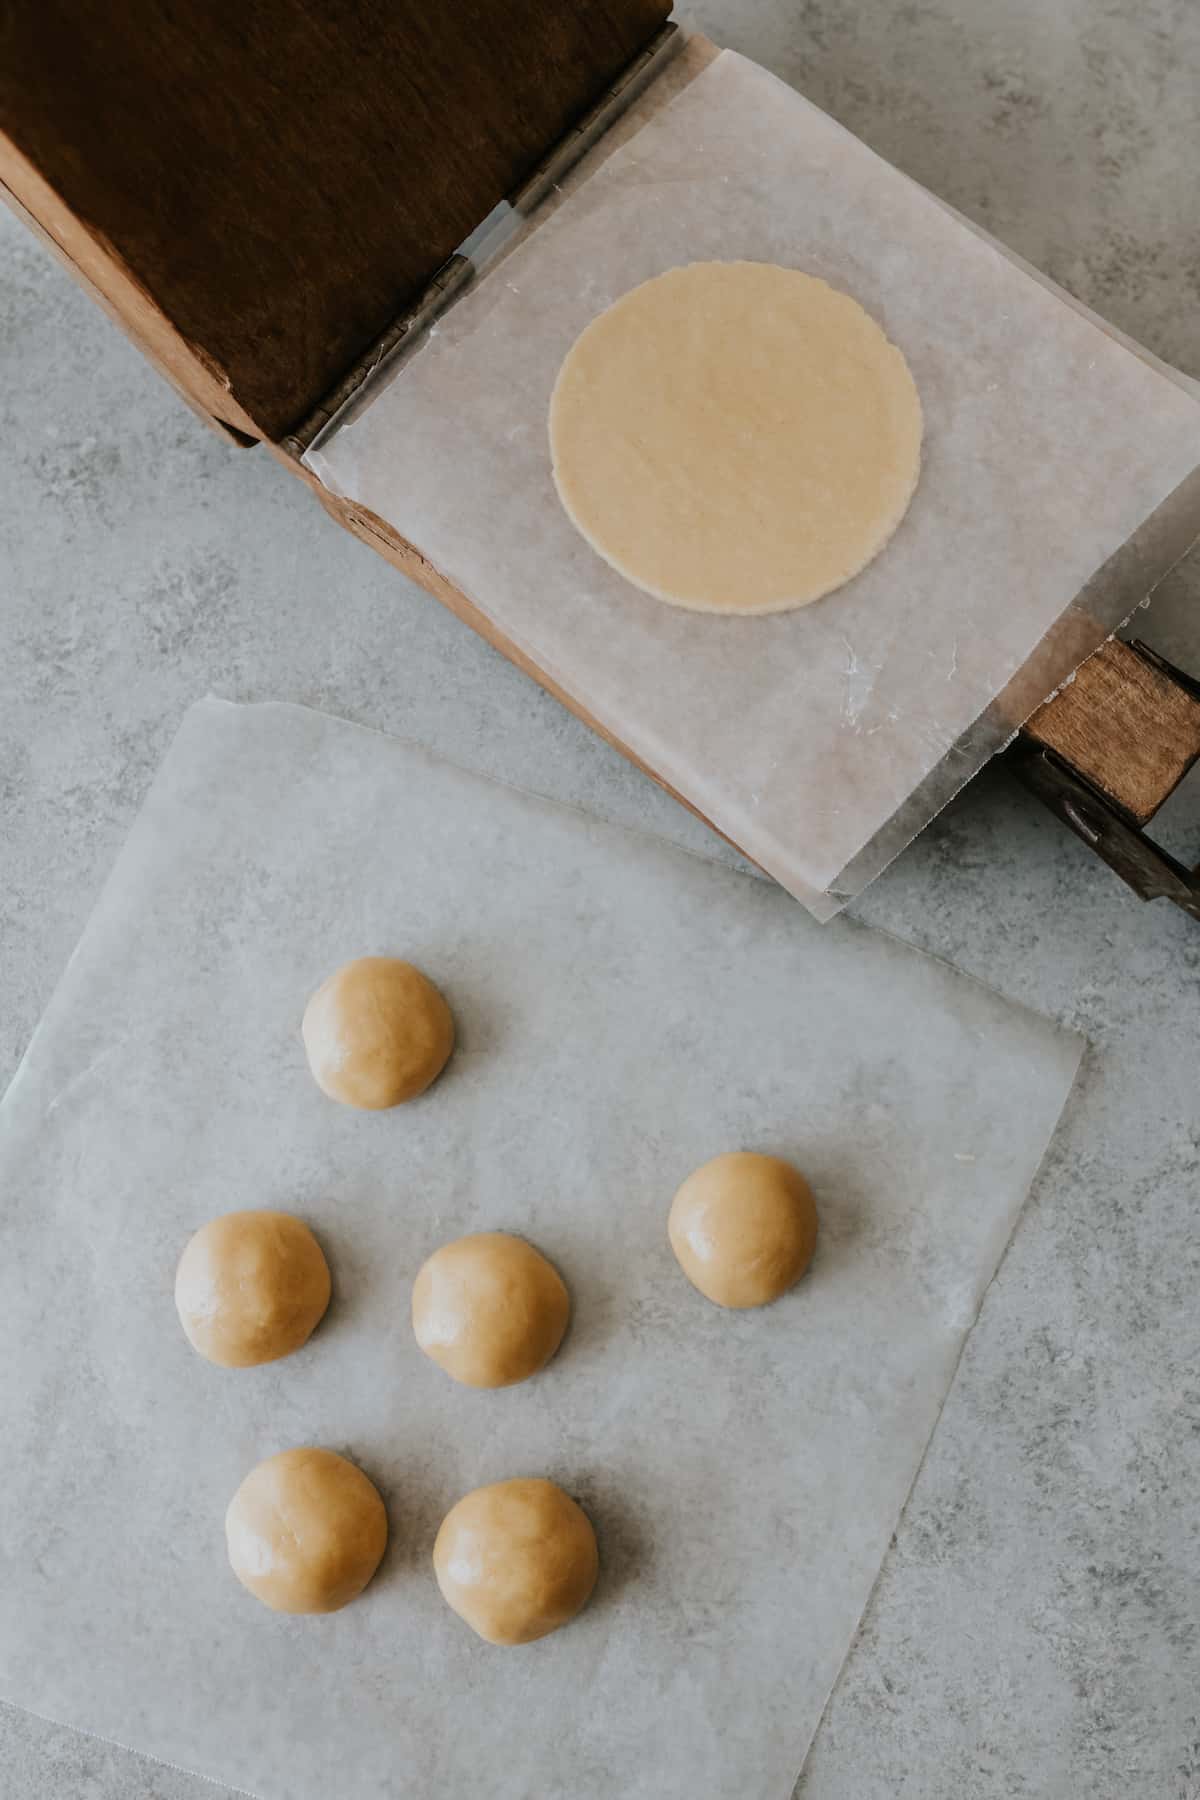 primitive wooden tortilla press with dough balls on wax paper